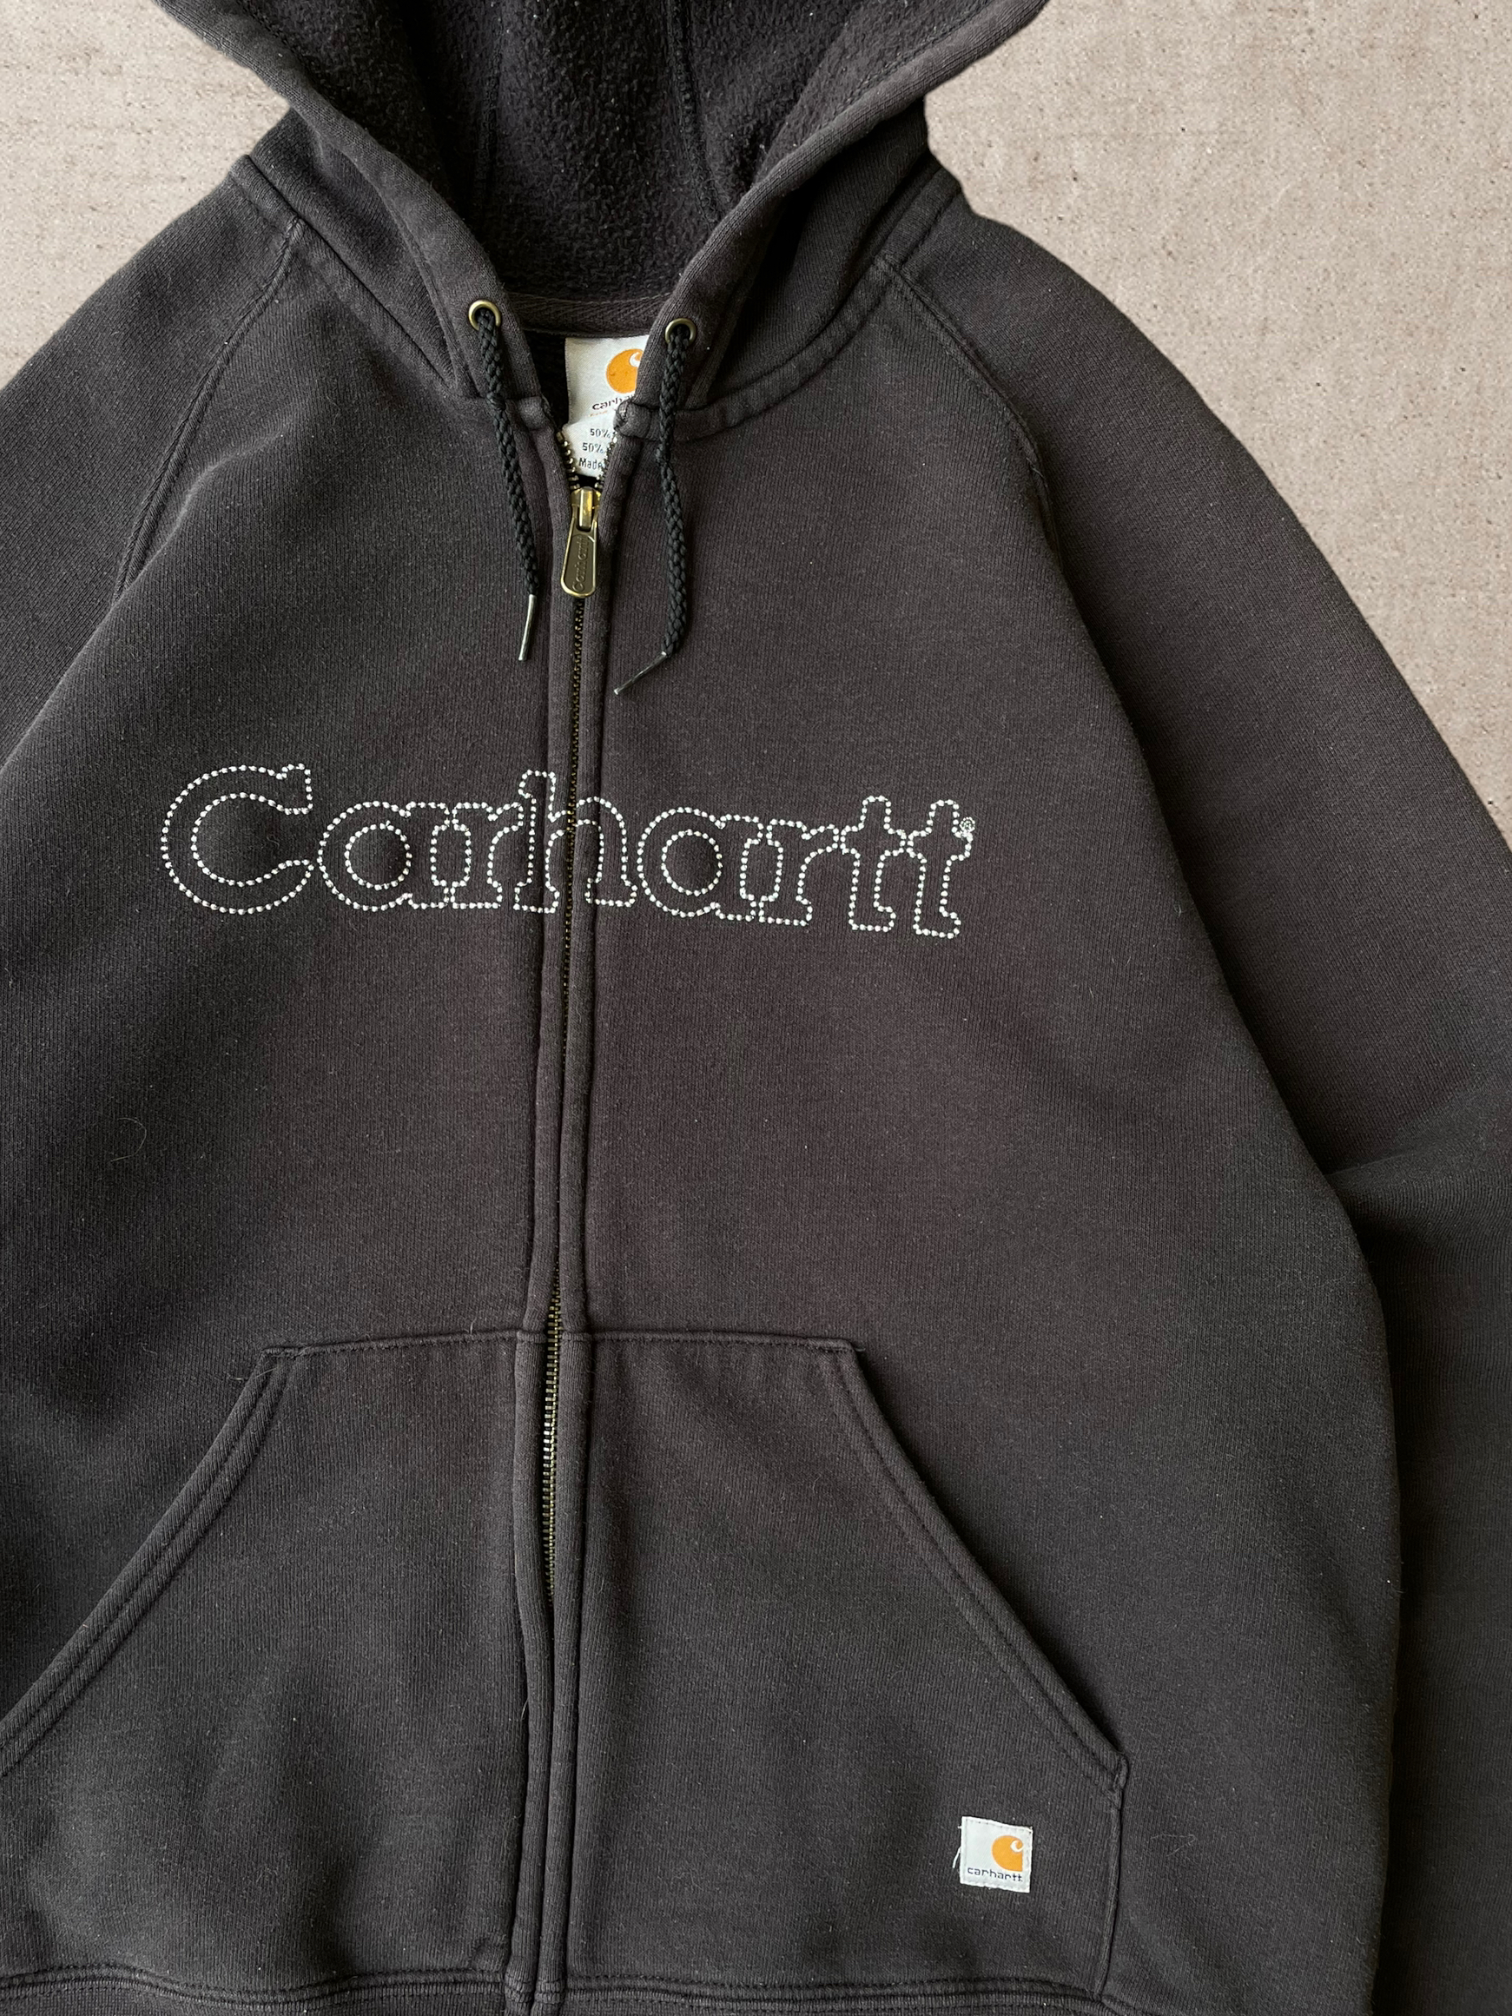 Vintage Carhartt Zip up Sweatshirt - Woman’s Large